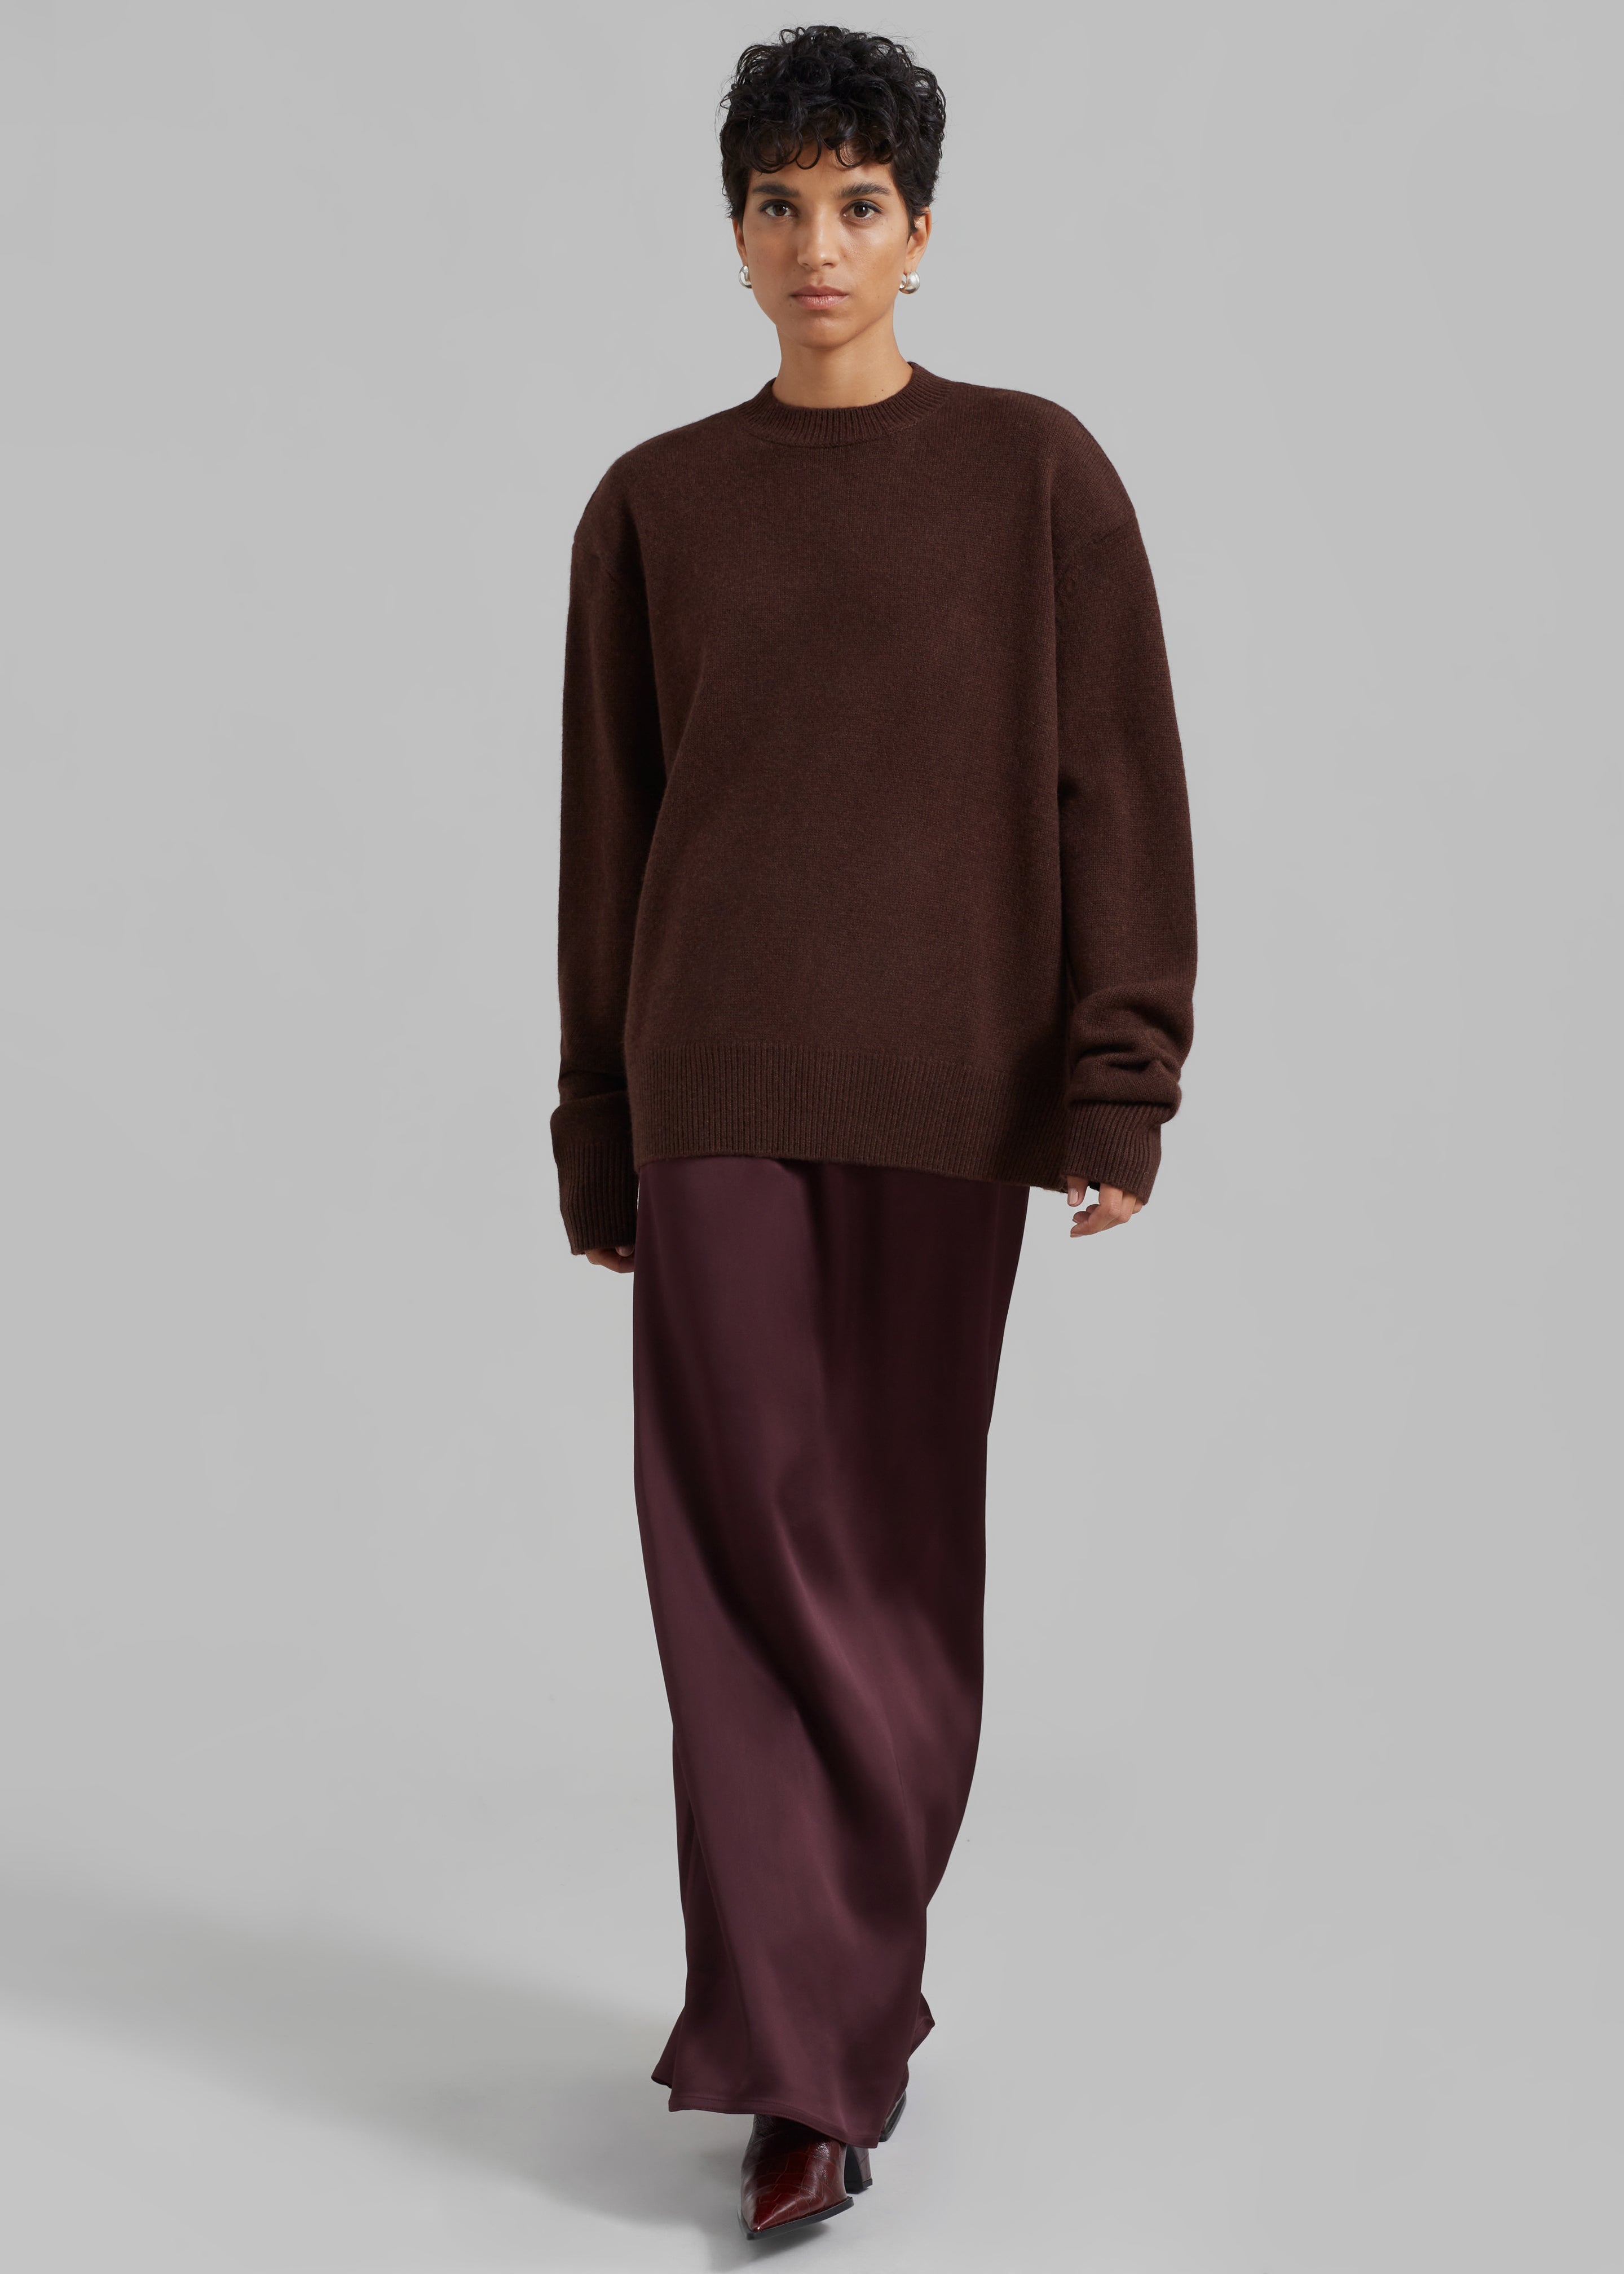 Bevza Ankle Length Skirt - Burgundy Brown - 5